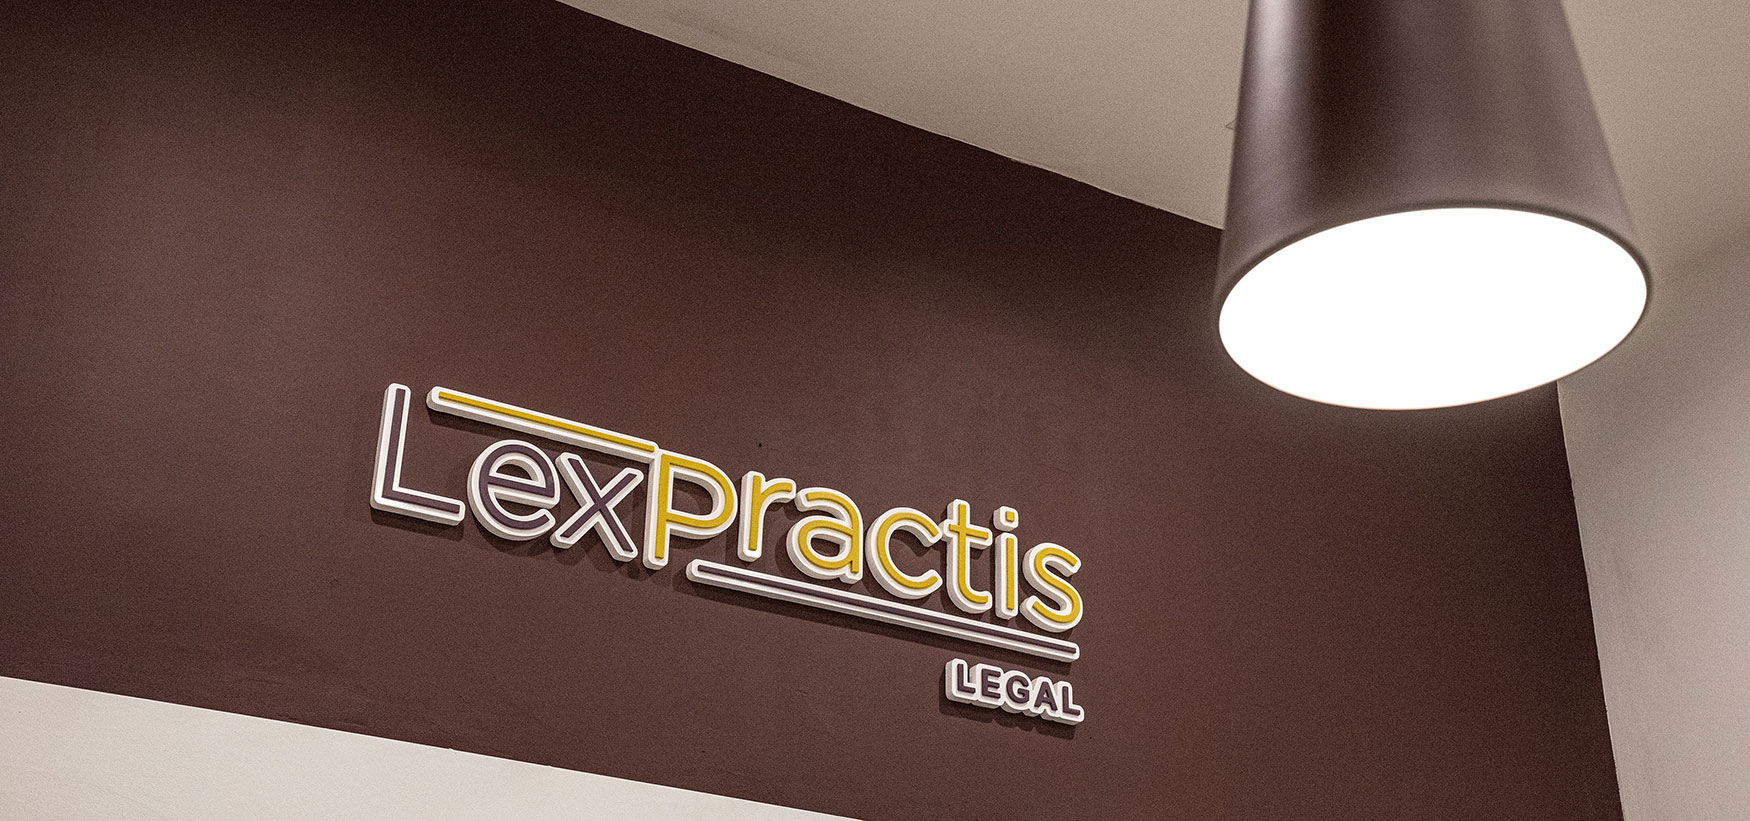 Lexpractis Legal Internal Office Logo